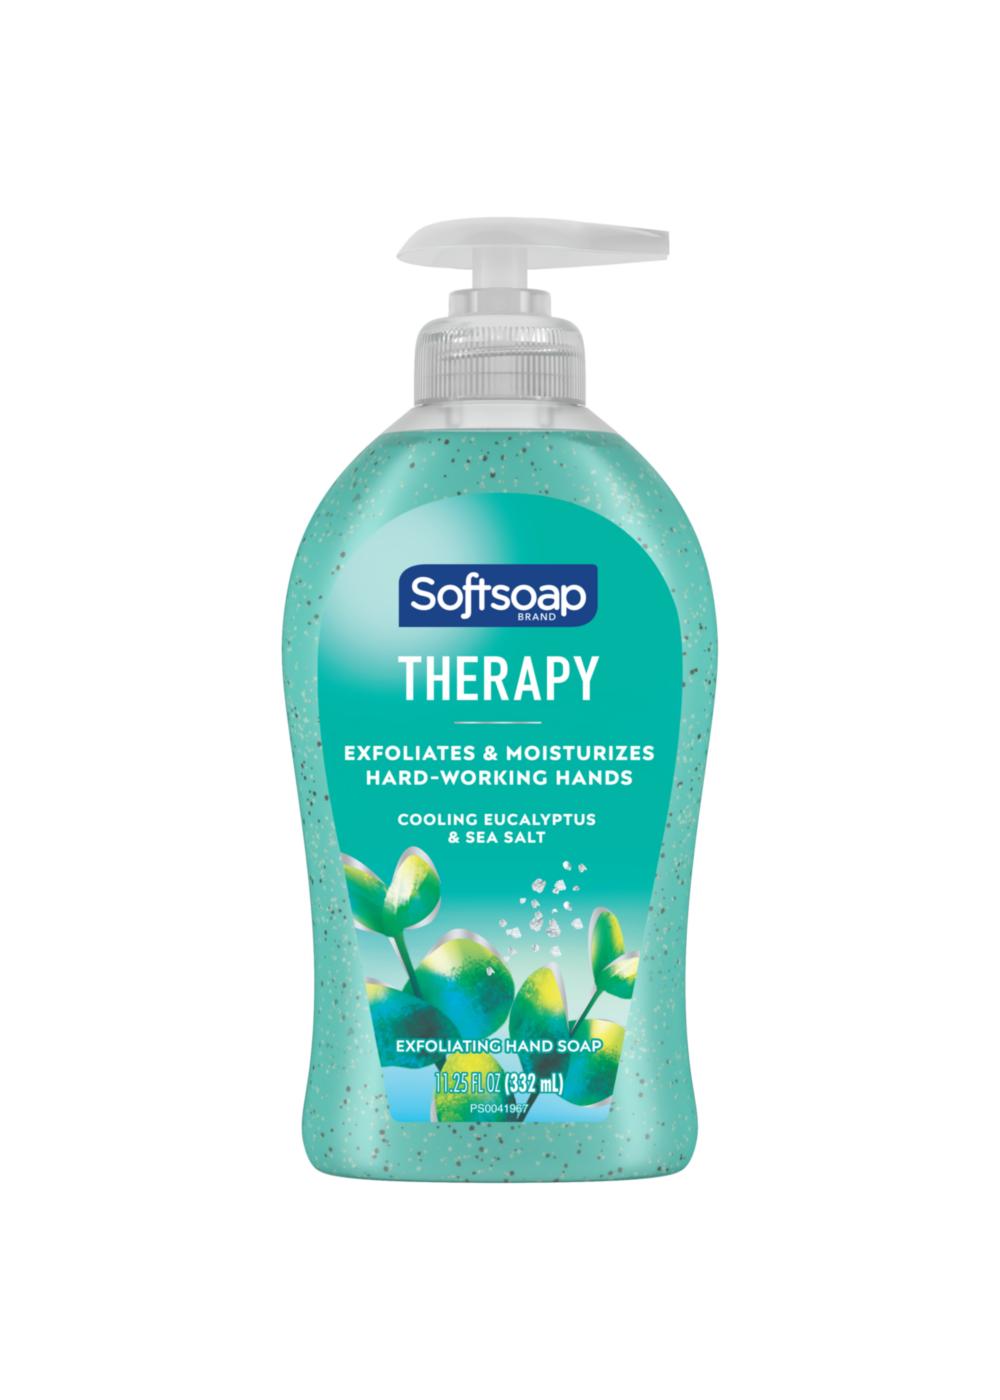 Softsoap Therapy Exfoliating Eucalyptus & Sea Salt Soap; image 1 of 2